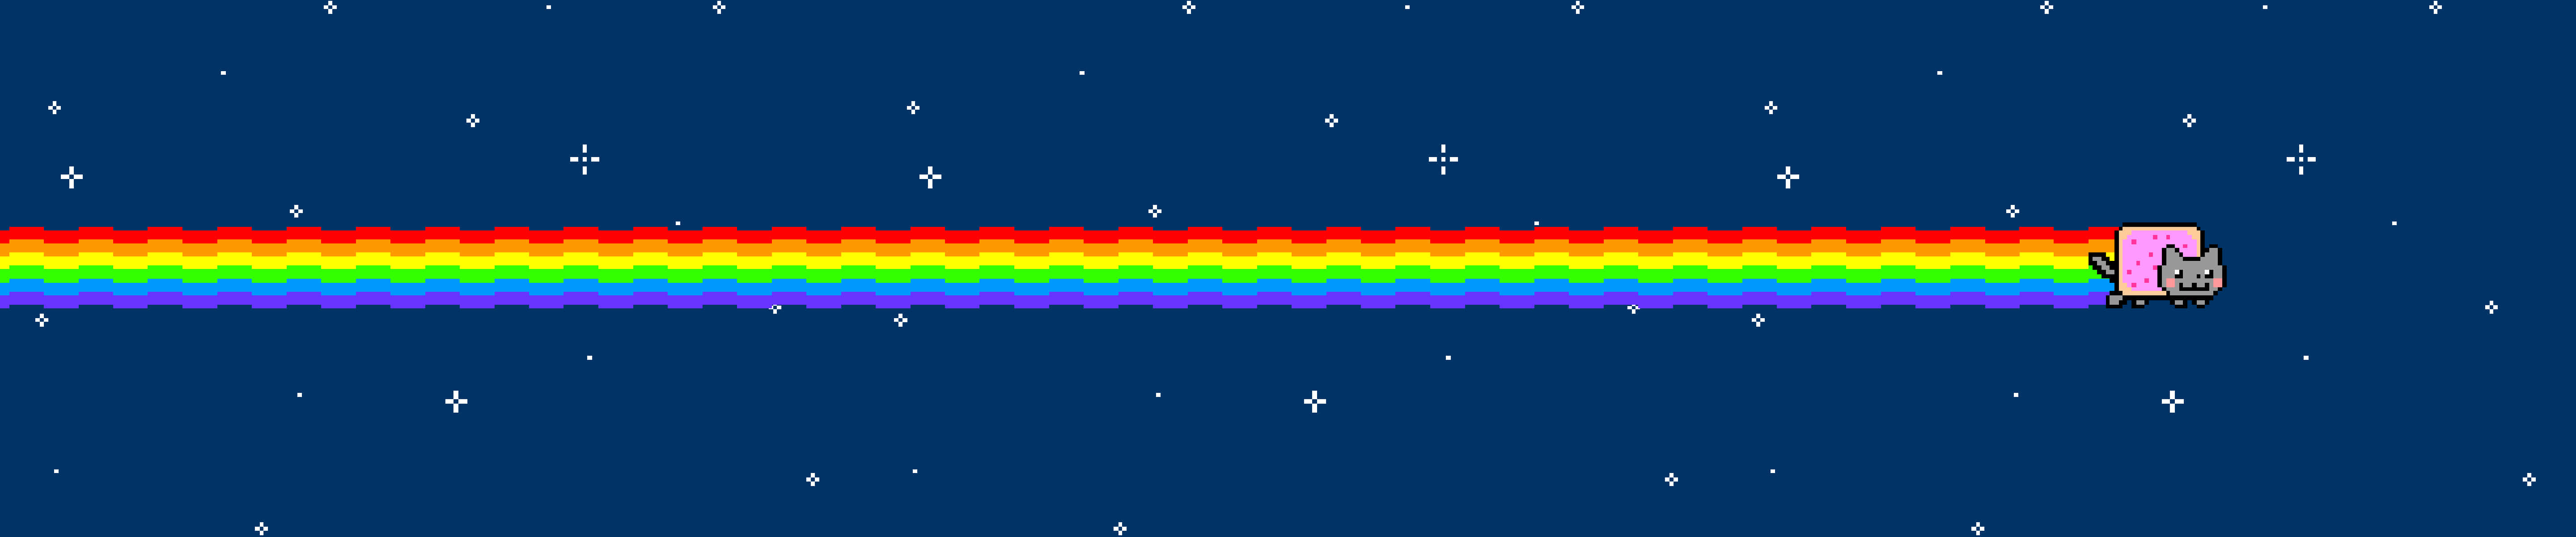 Carinosfondo Per Monitor Pixel 3 Con Un Nyan Cat Arcobaleno Pixelato